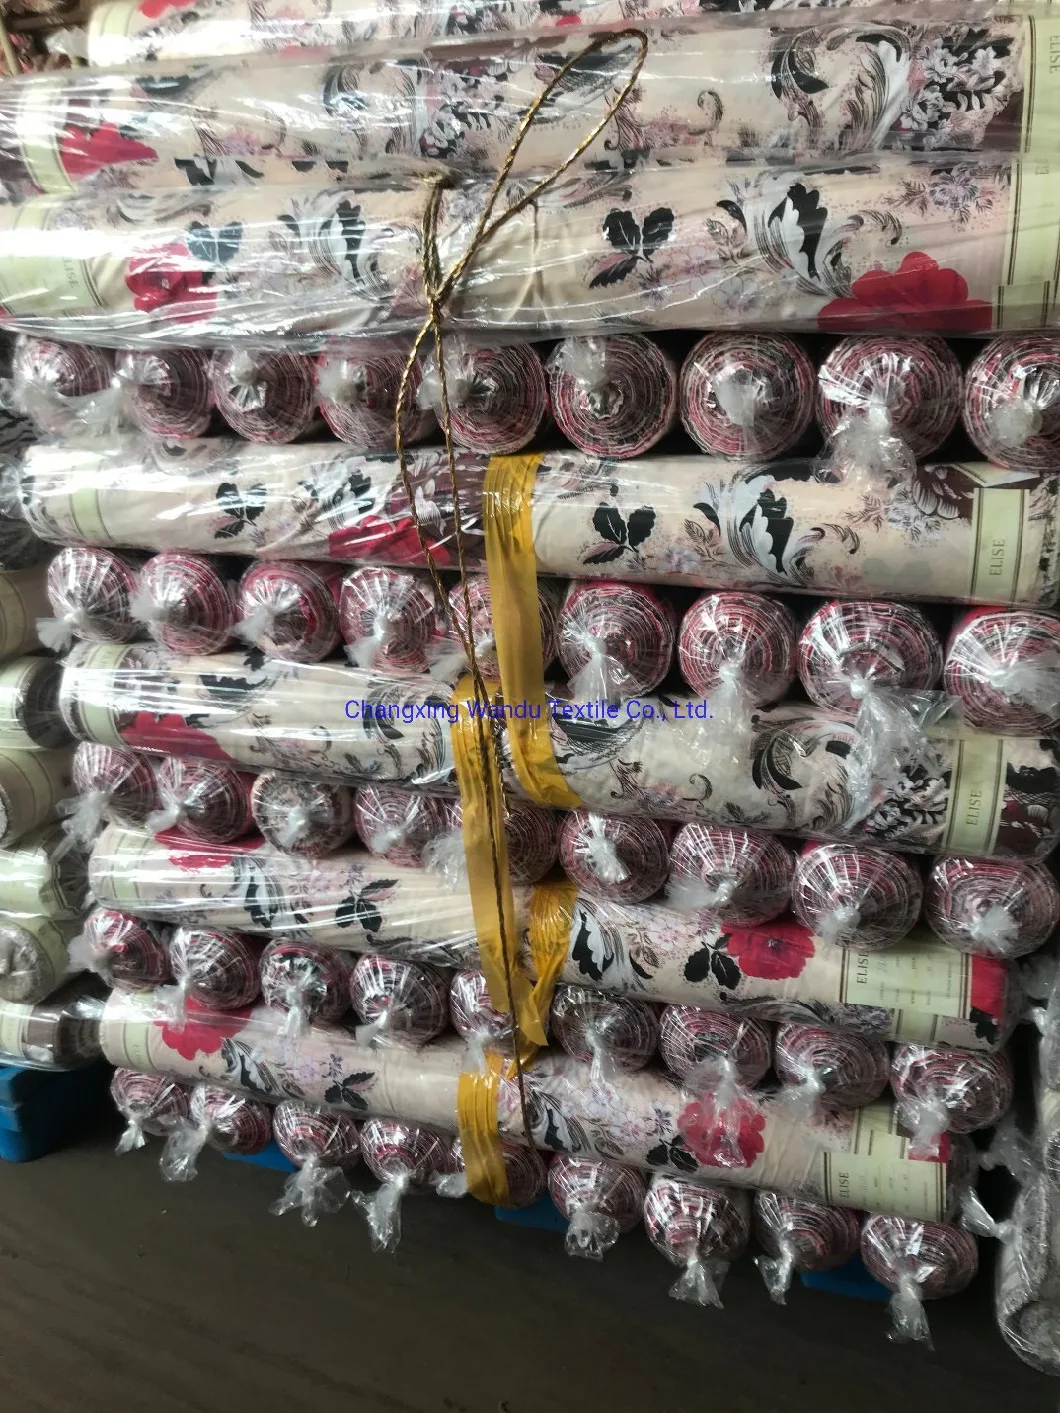 Textile Export, Changxing Wandu Textile Bedsheet Wholesale, Latest Order Pattern, Polyester Microfiber Fabric